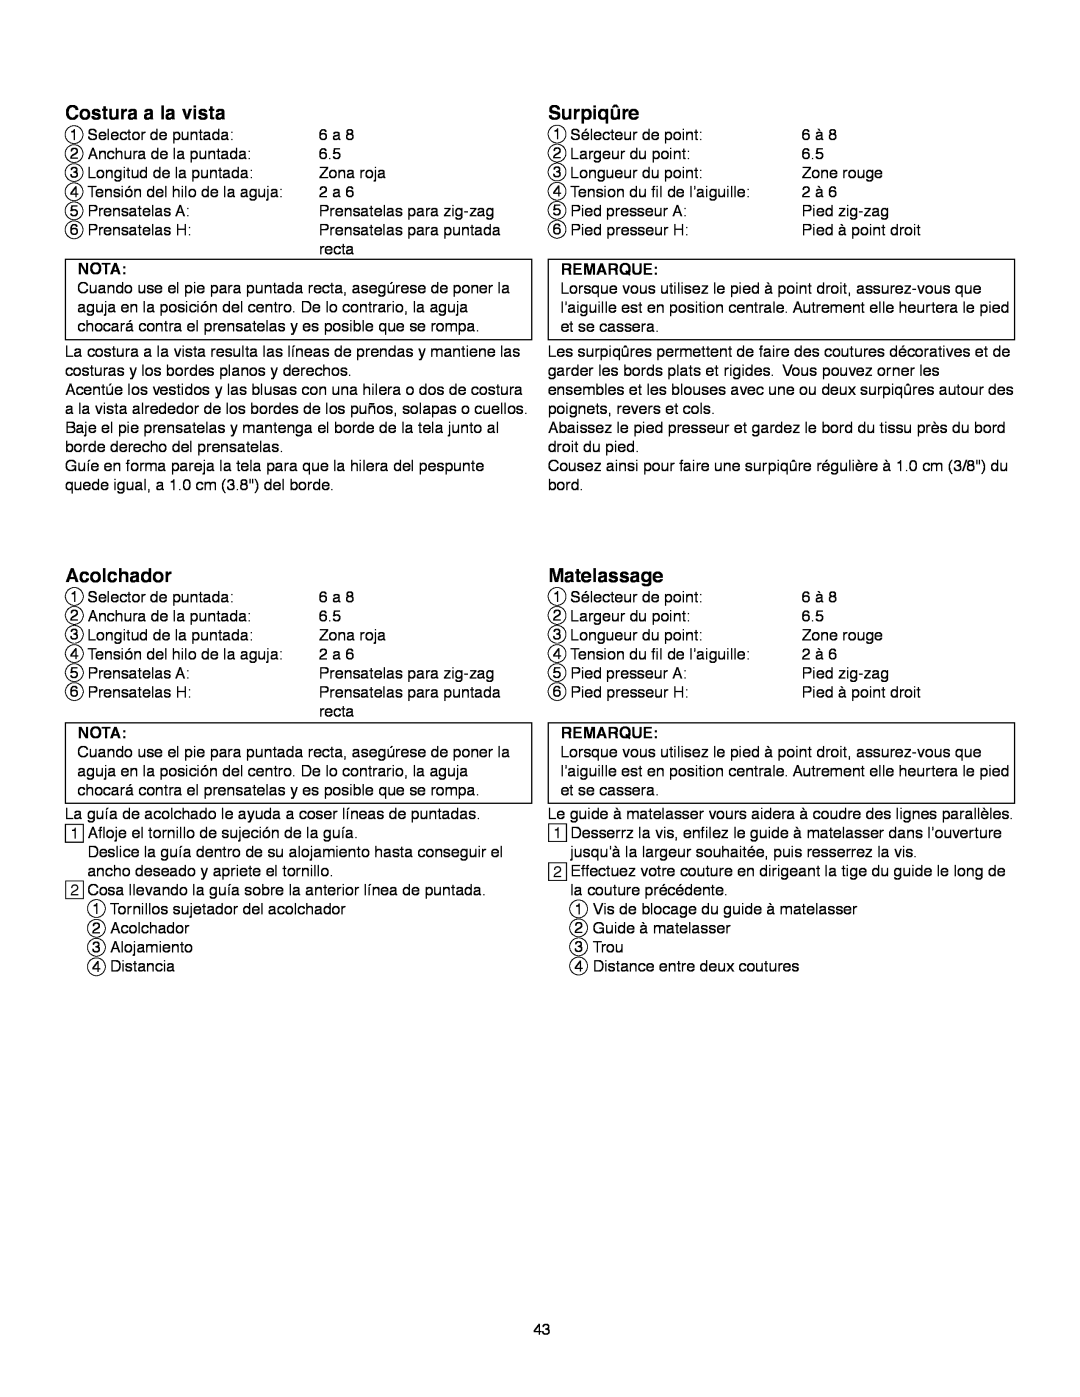 Janome MS-5027 instruction manual Costura a la vista, Acolchador, Surpiqûre, Matelassage, Nota, Remarque 